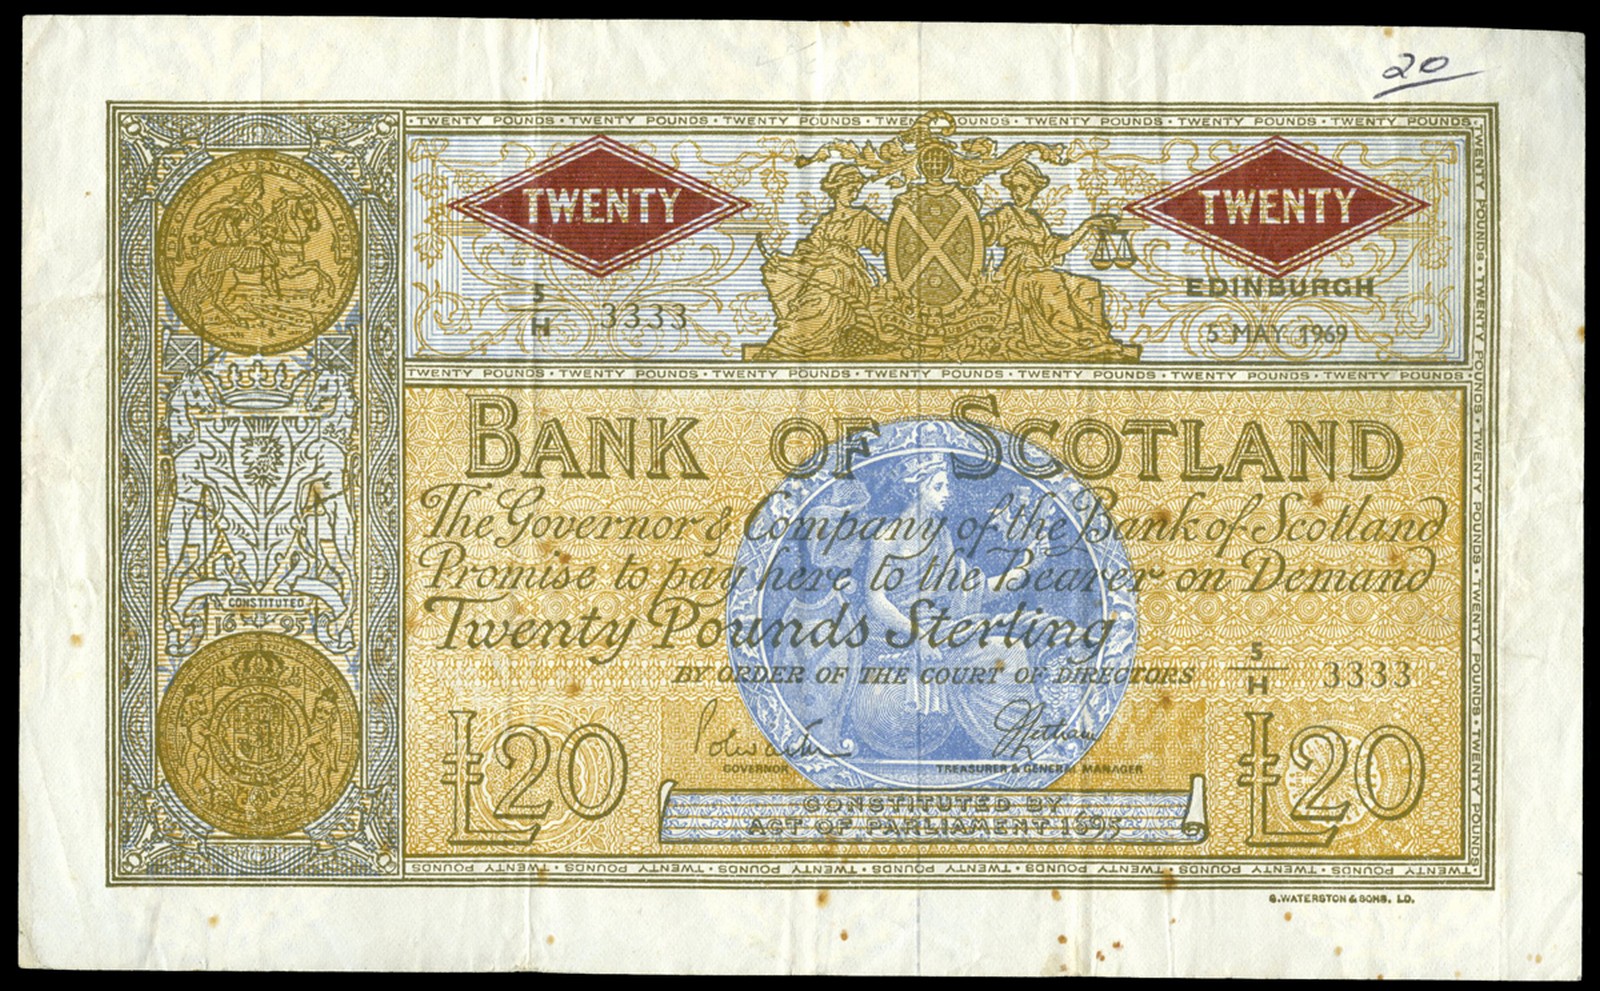 BRITISH BANKNOTES, Lots, Bank of Scotland, Twenty Pounds, 5 May 1969, 5/H 3333, Polwarth-Letham